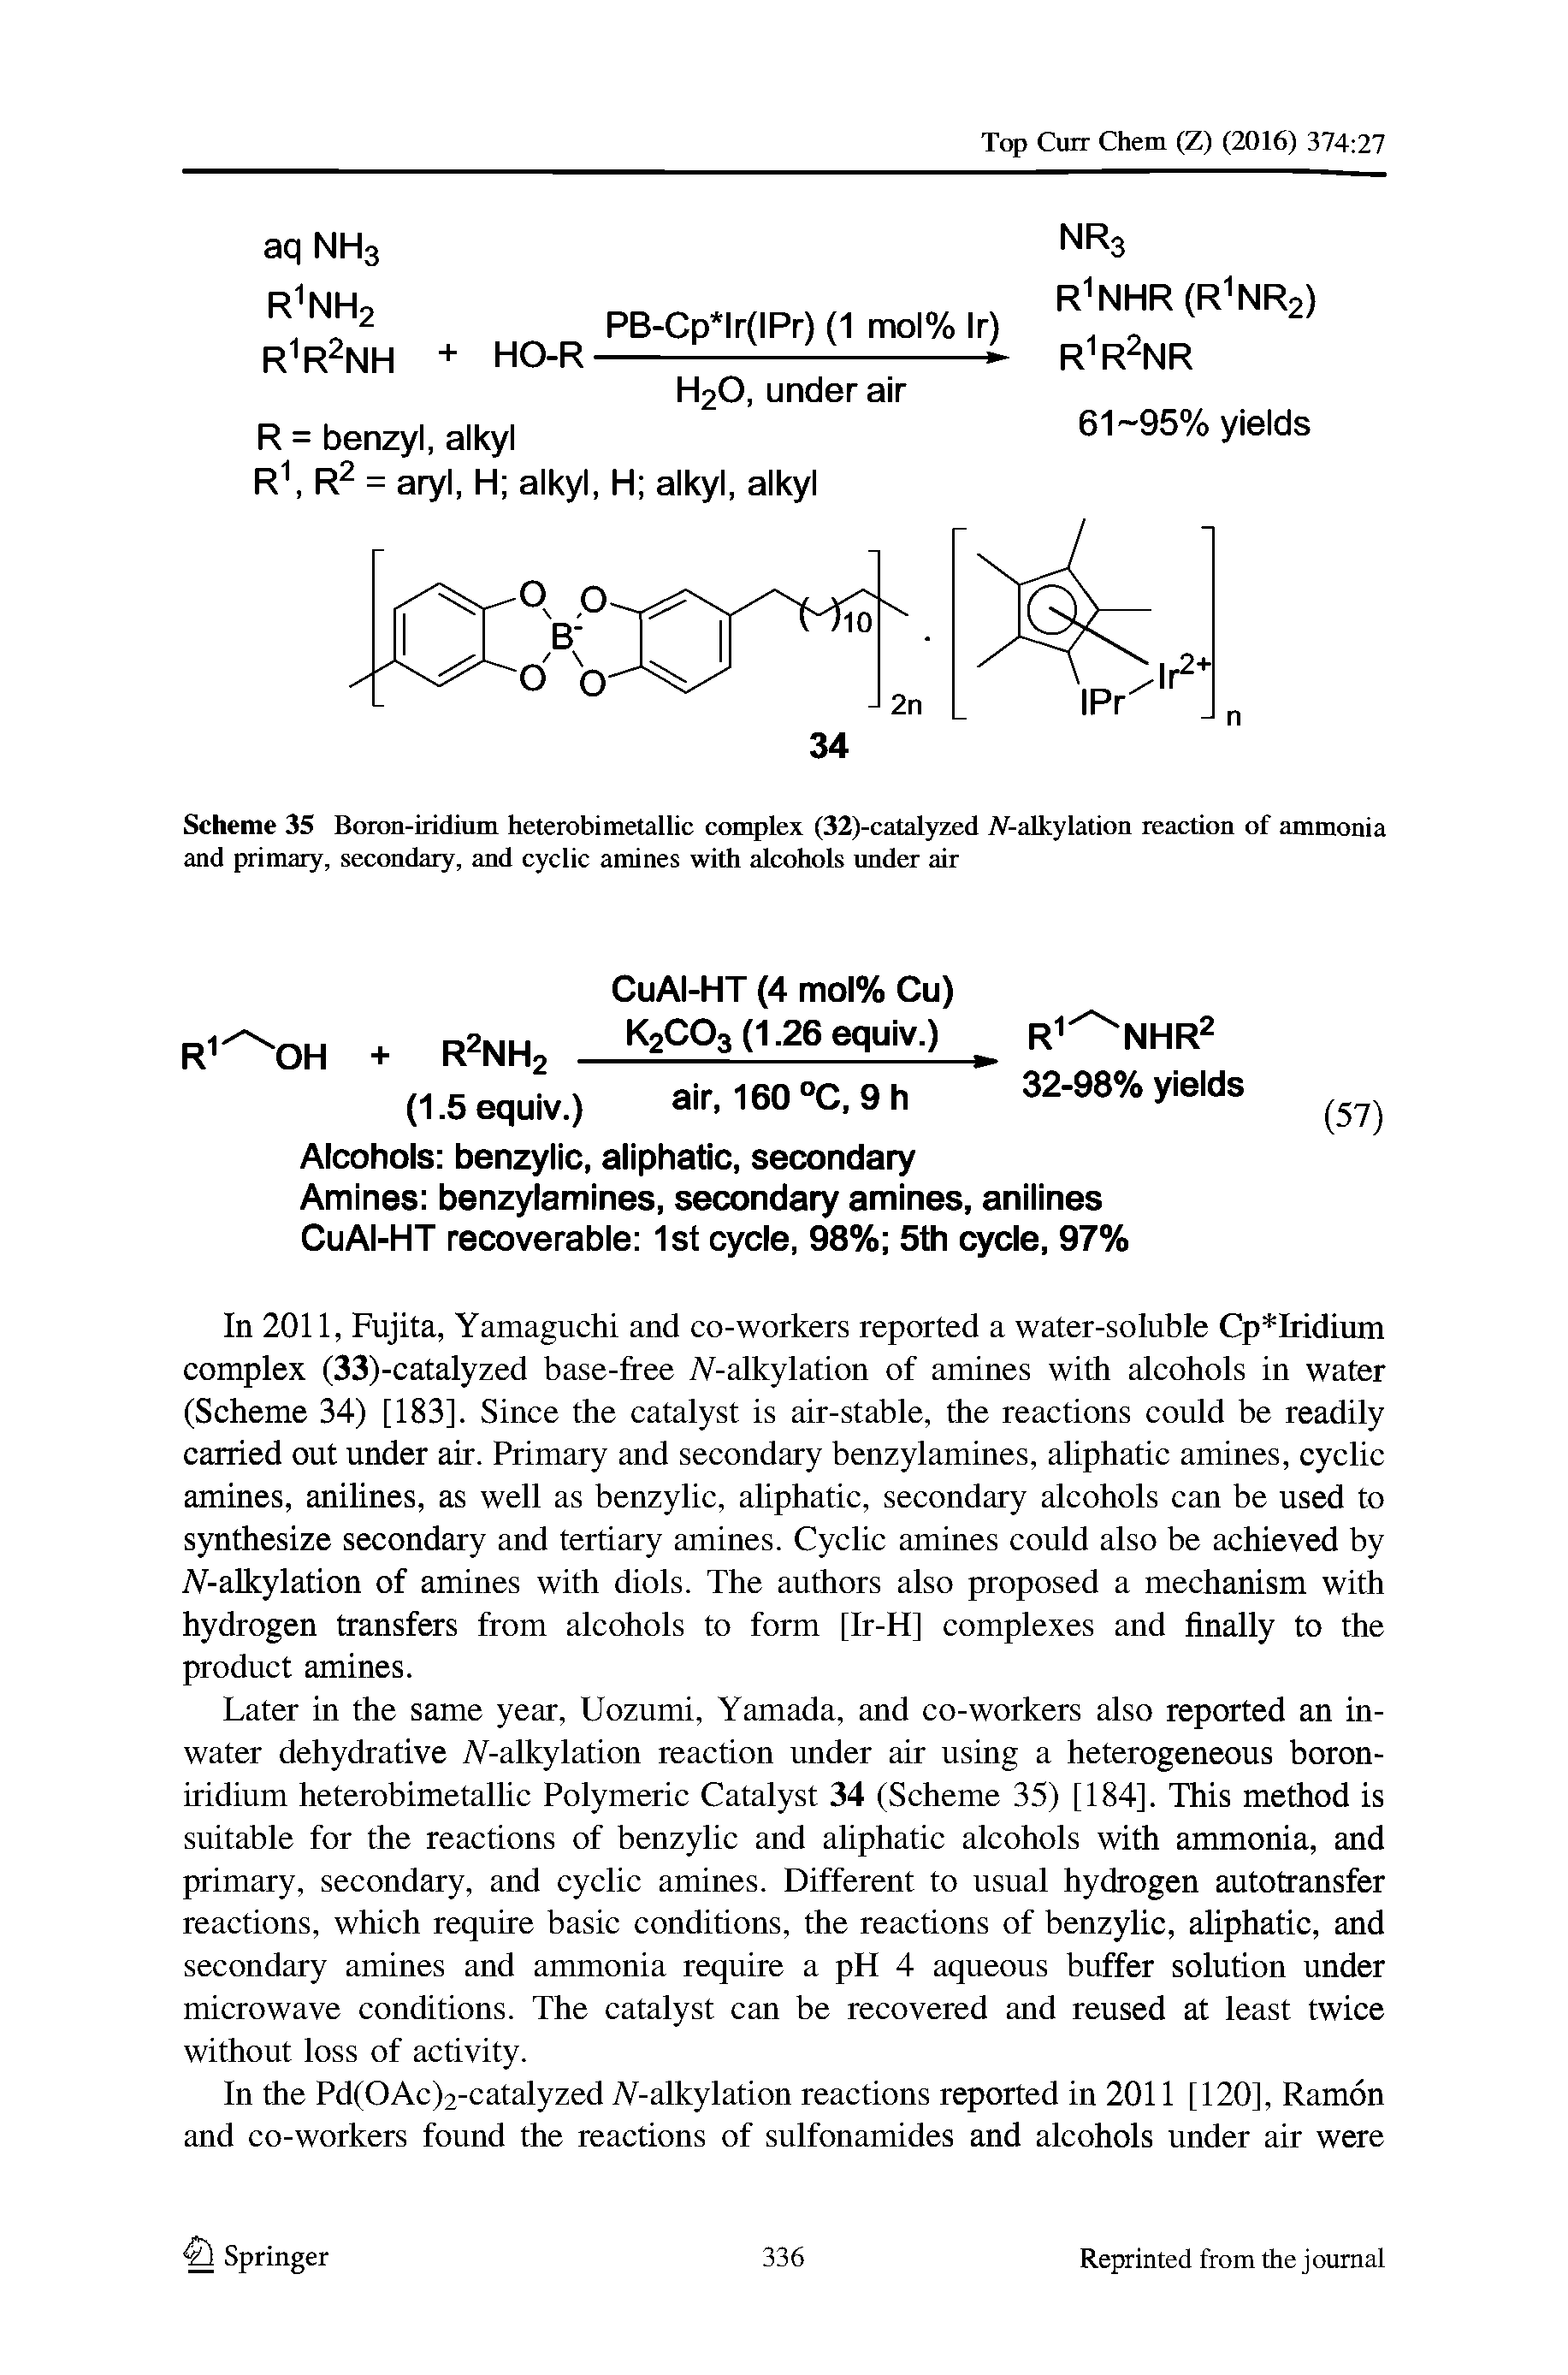 Scheme 35 Boron-iridium heterobimetallic complex (32)-catalyzed A alkylation reaction of ammonia and primary, secondary, and cyclic amines with alcohols under air...